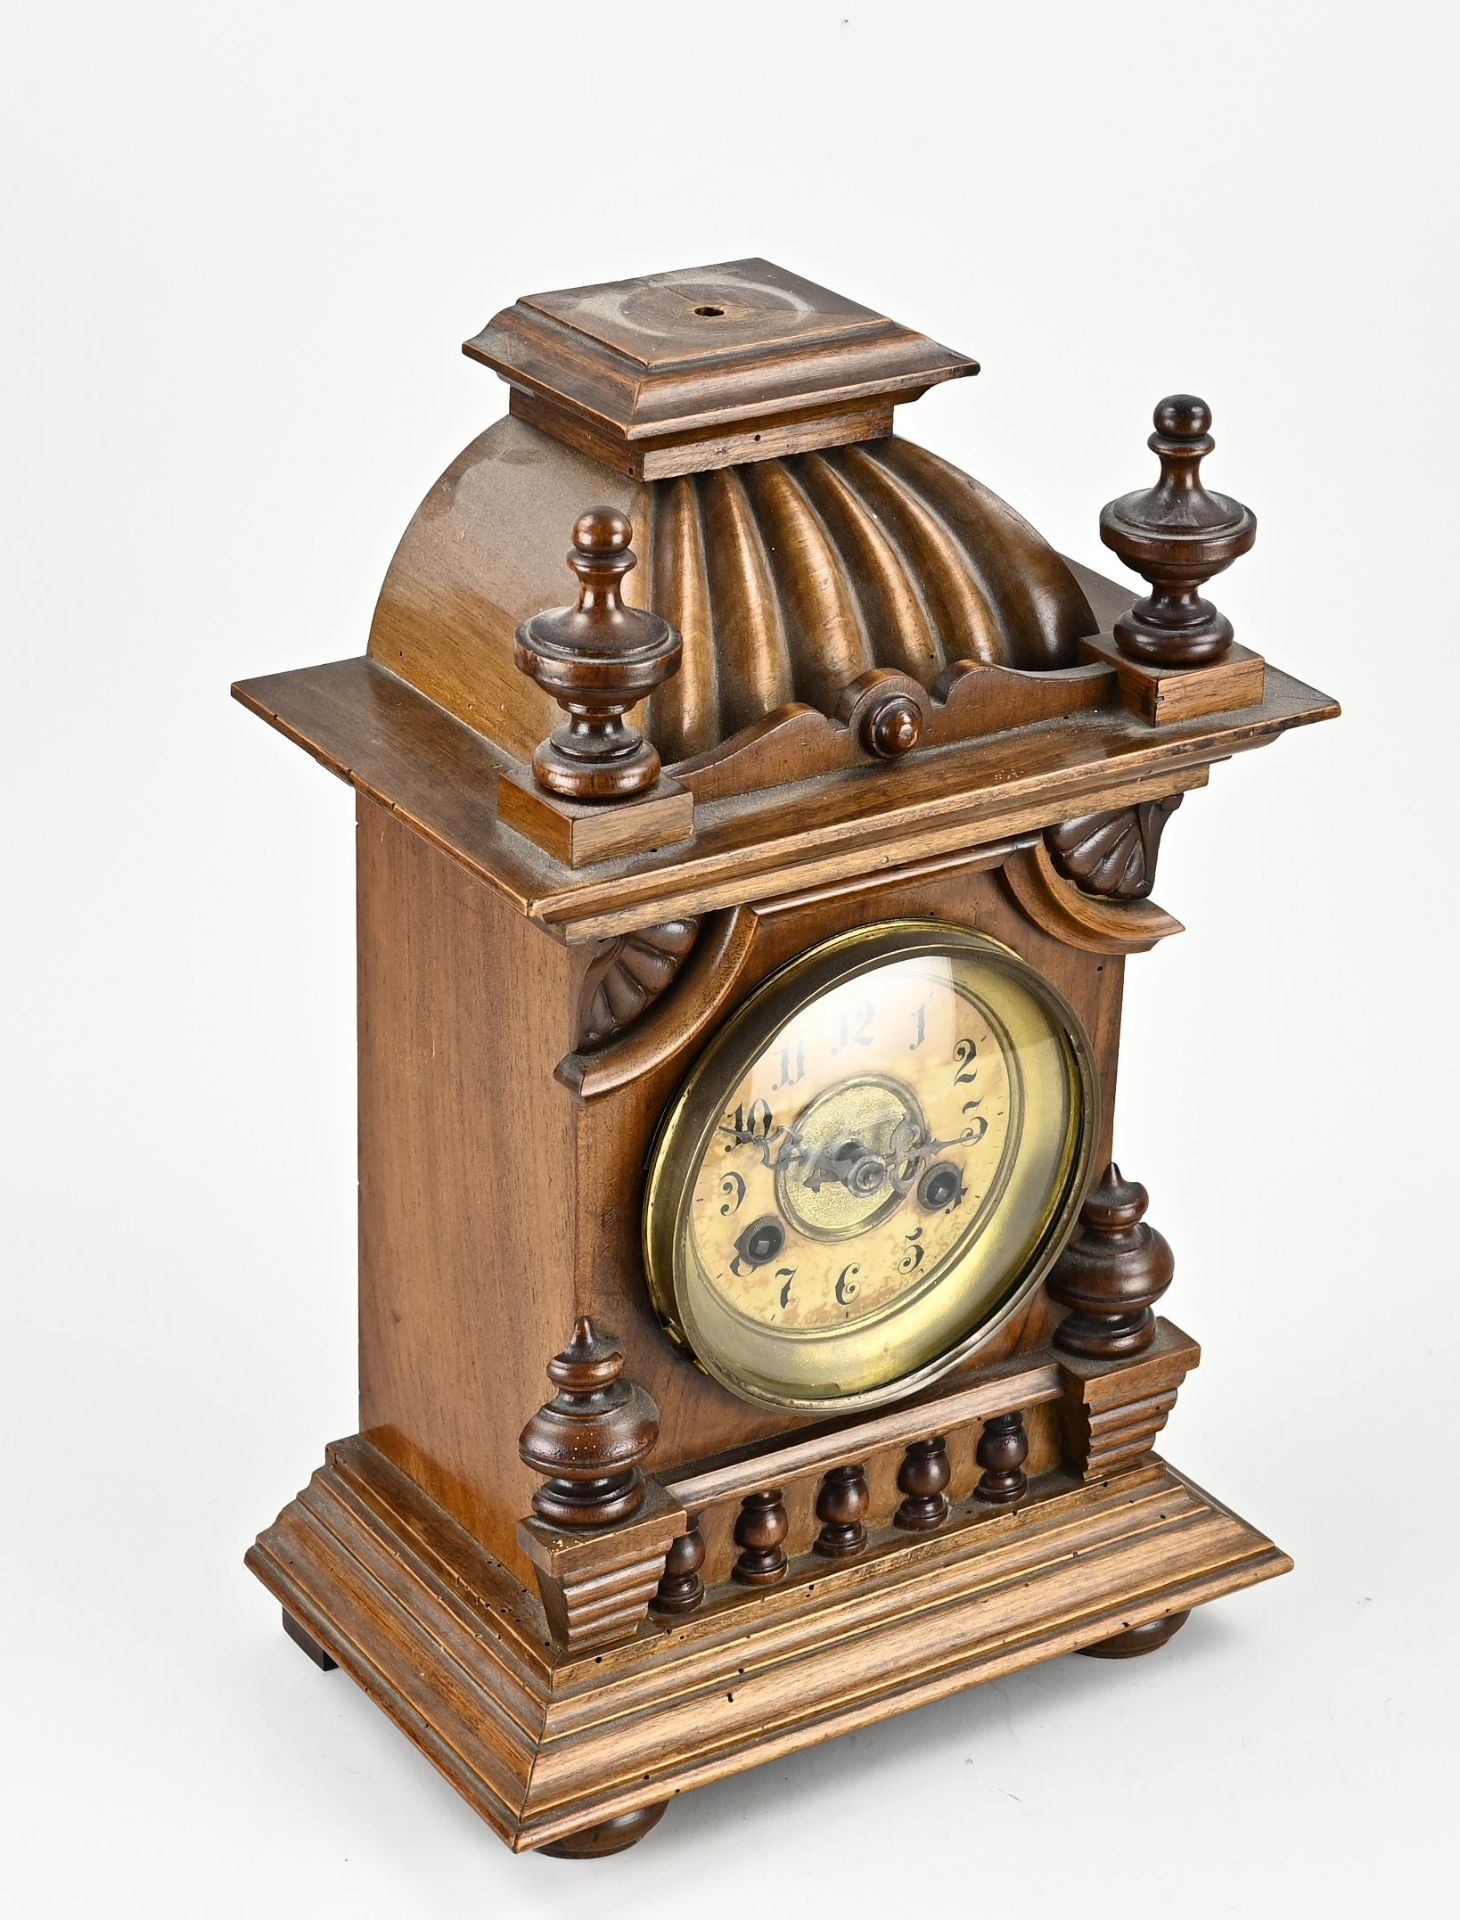 Junghans table clock, 1890